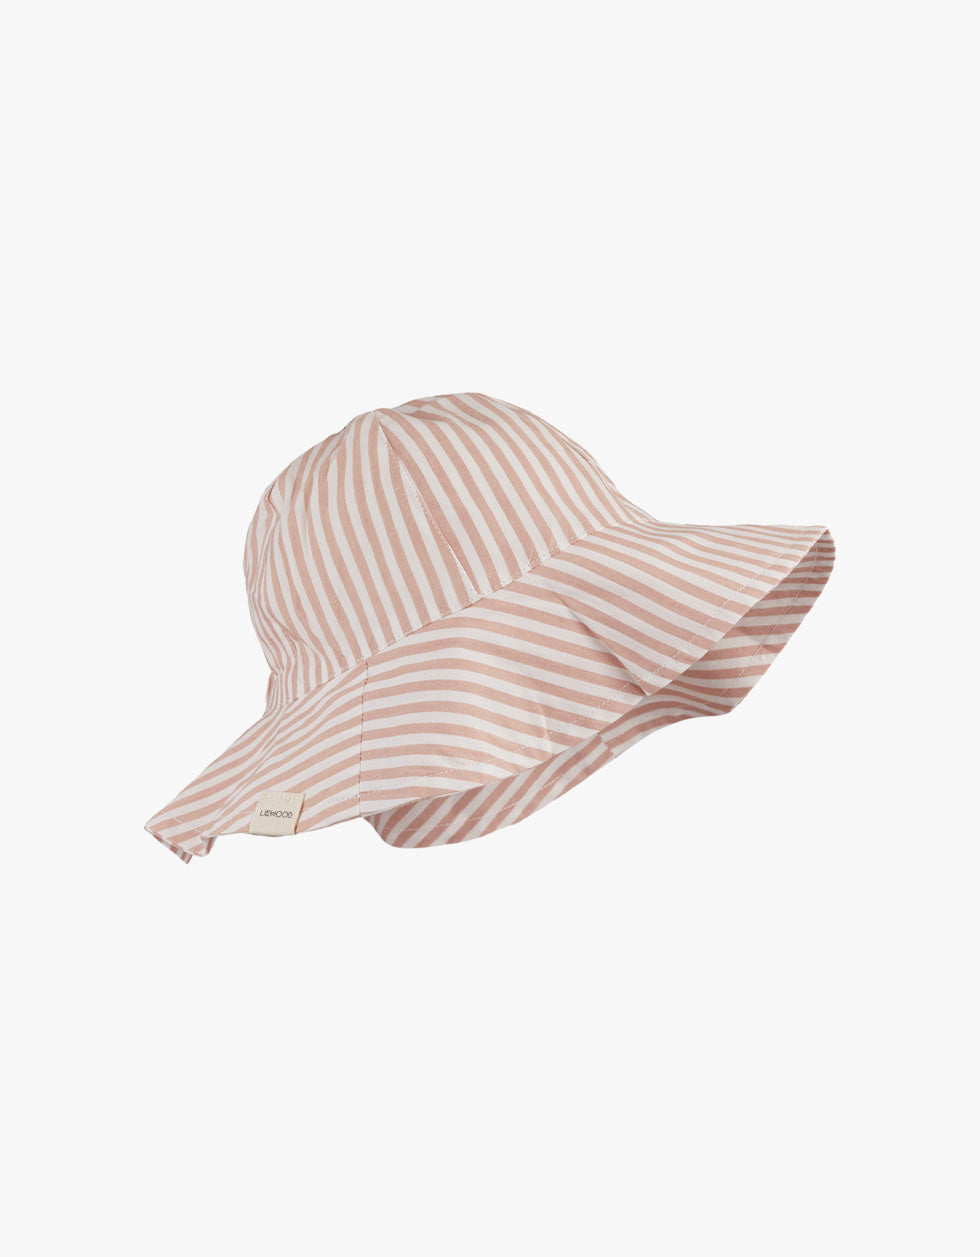 Amelia Sun Hat - Y/D Stripe: Coral Blush/Creme De La Creme